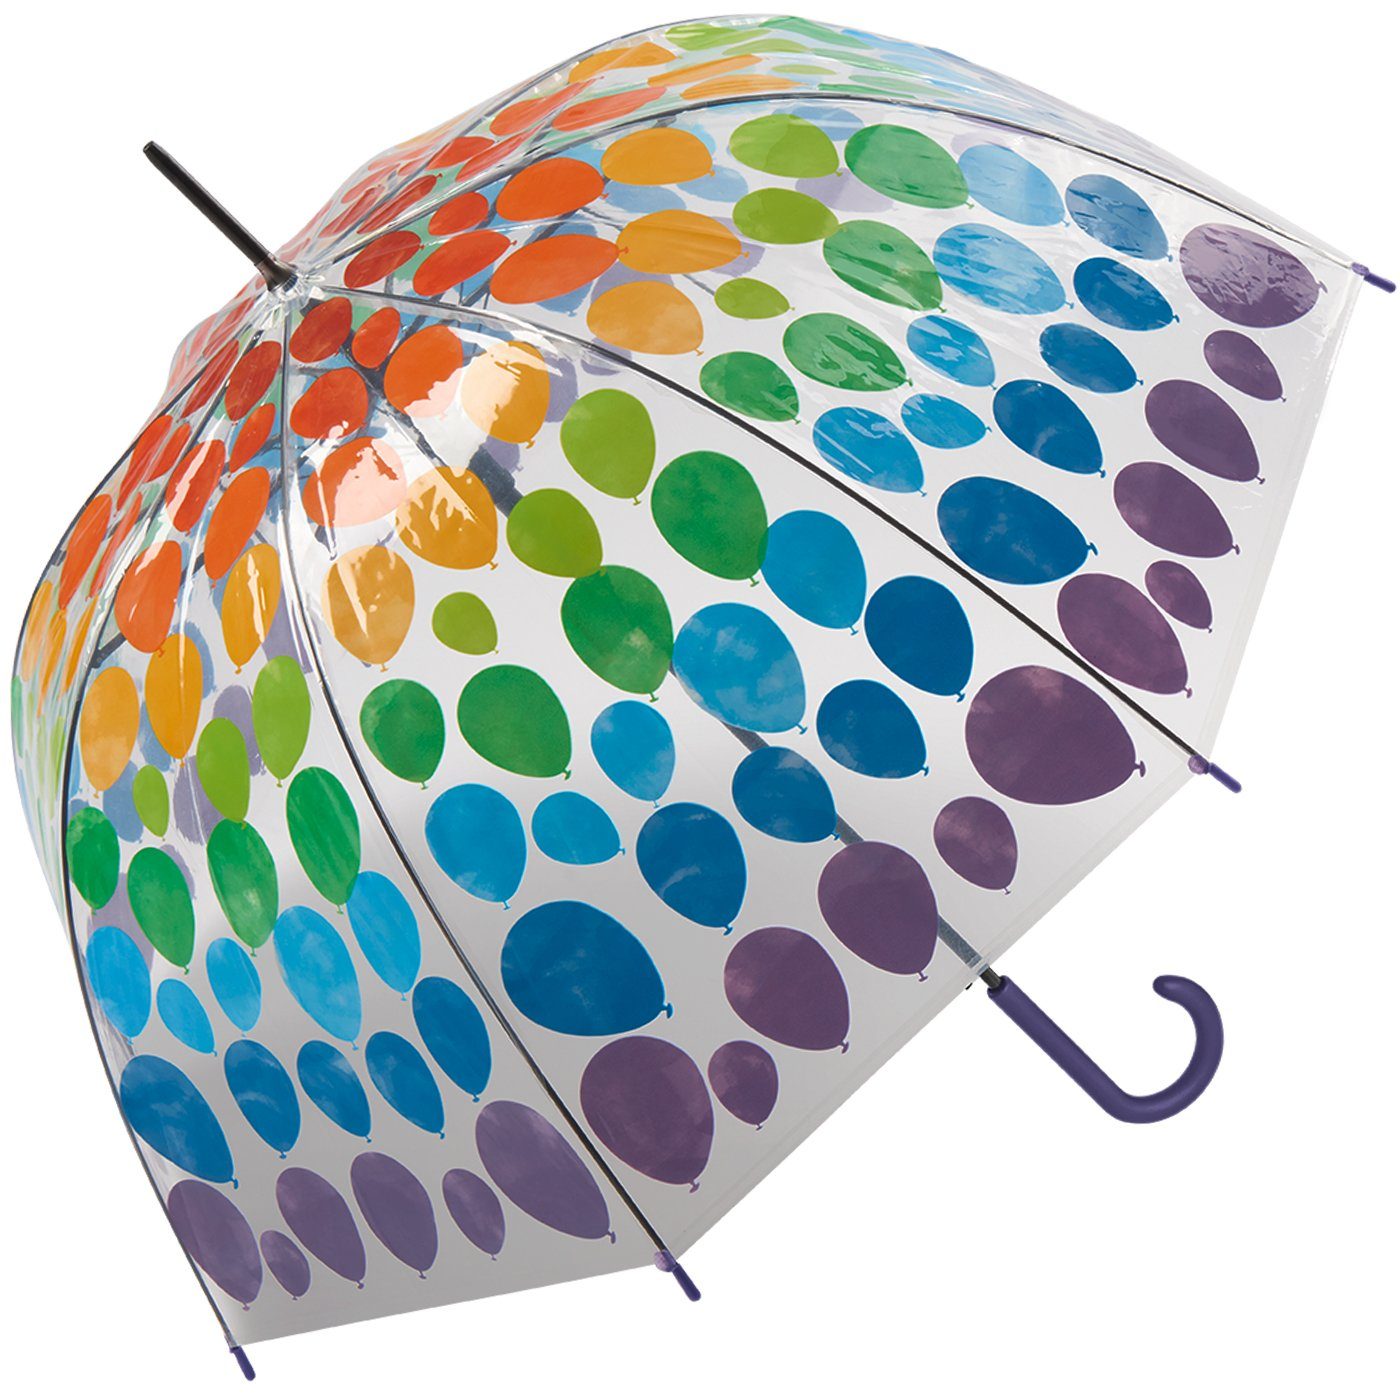 of Glockenschirm Ballons transparent-farbig, mit bunten Automatik - Luftballons Benetton bedruckt Langregenschirm Colors mit United